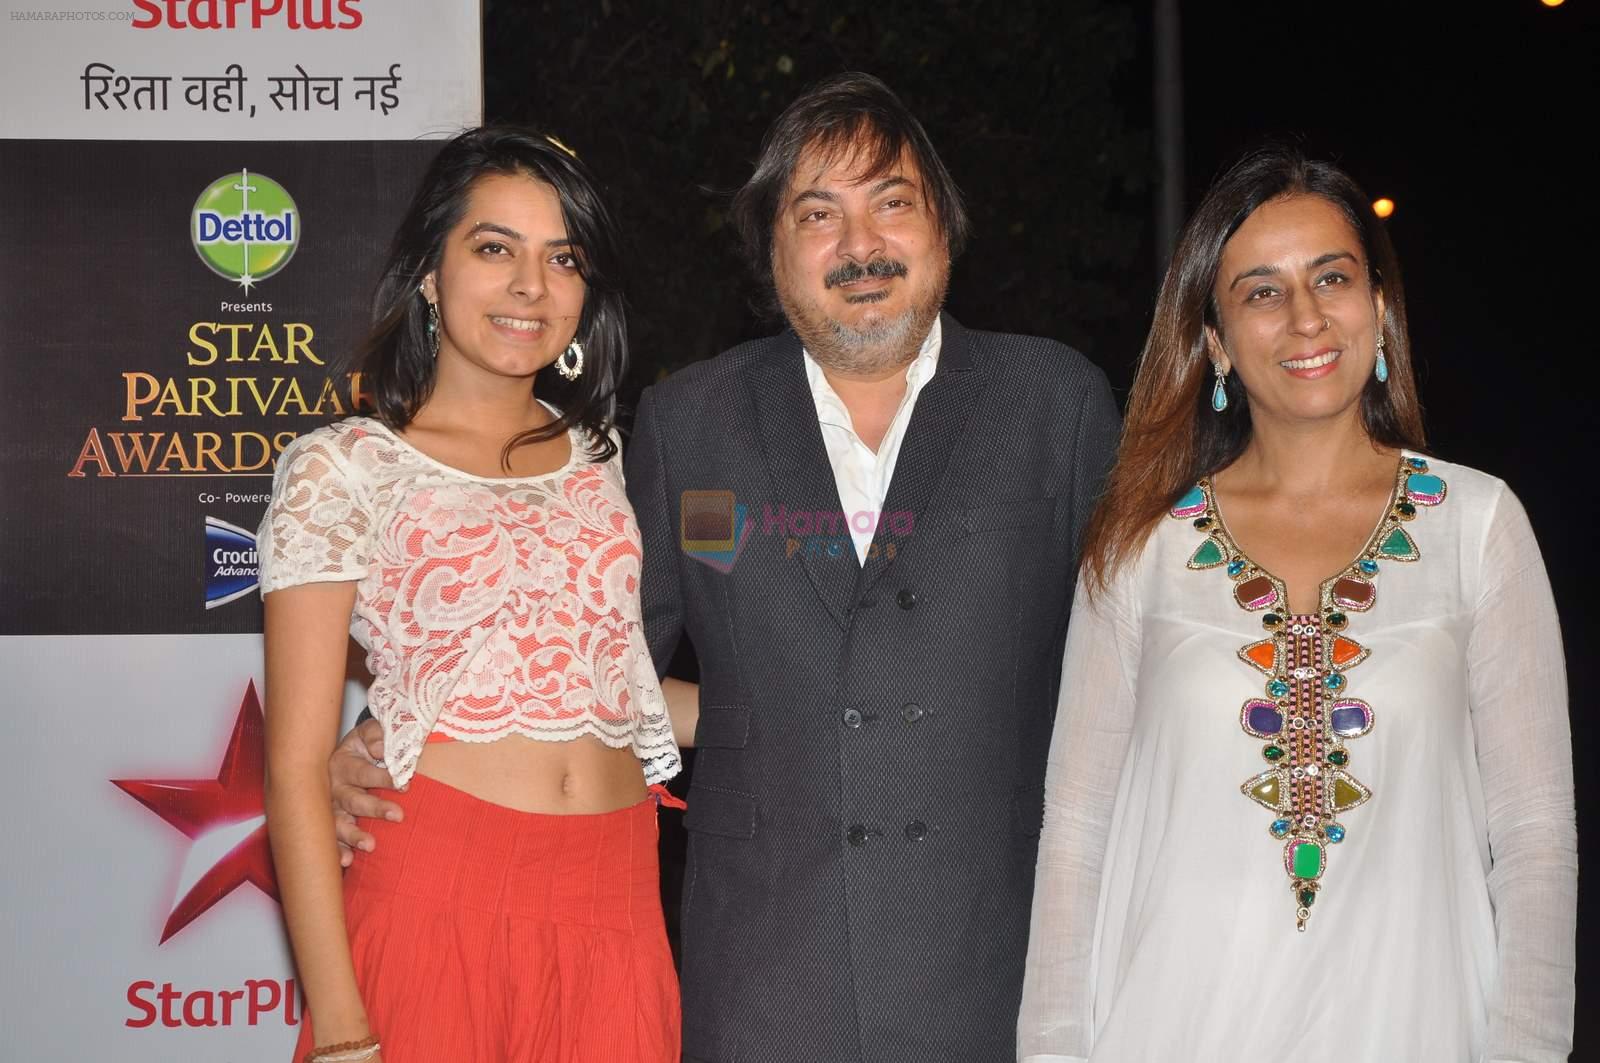 Tony Singh, Deeya Singh at Star Pariwar Awards in Mumbai on 17th May 2015